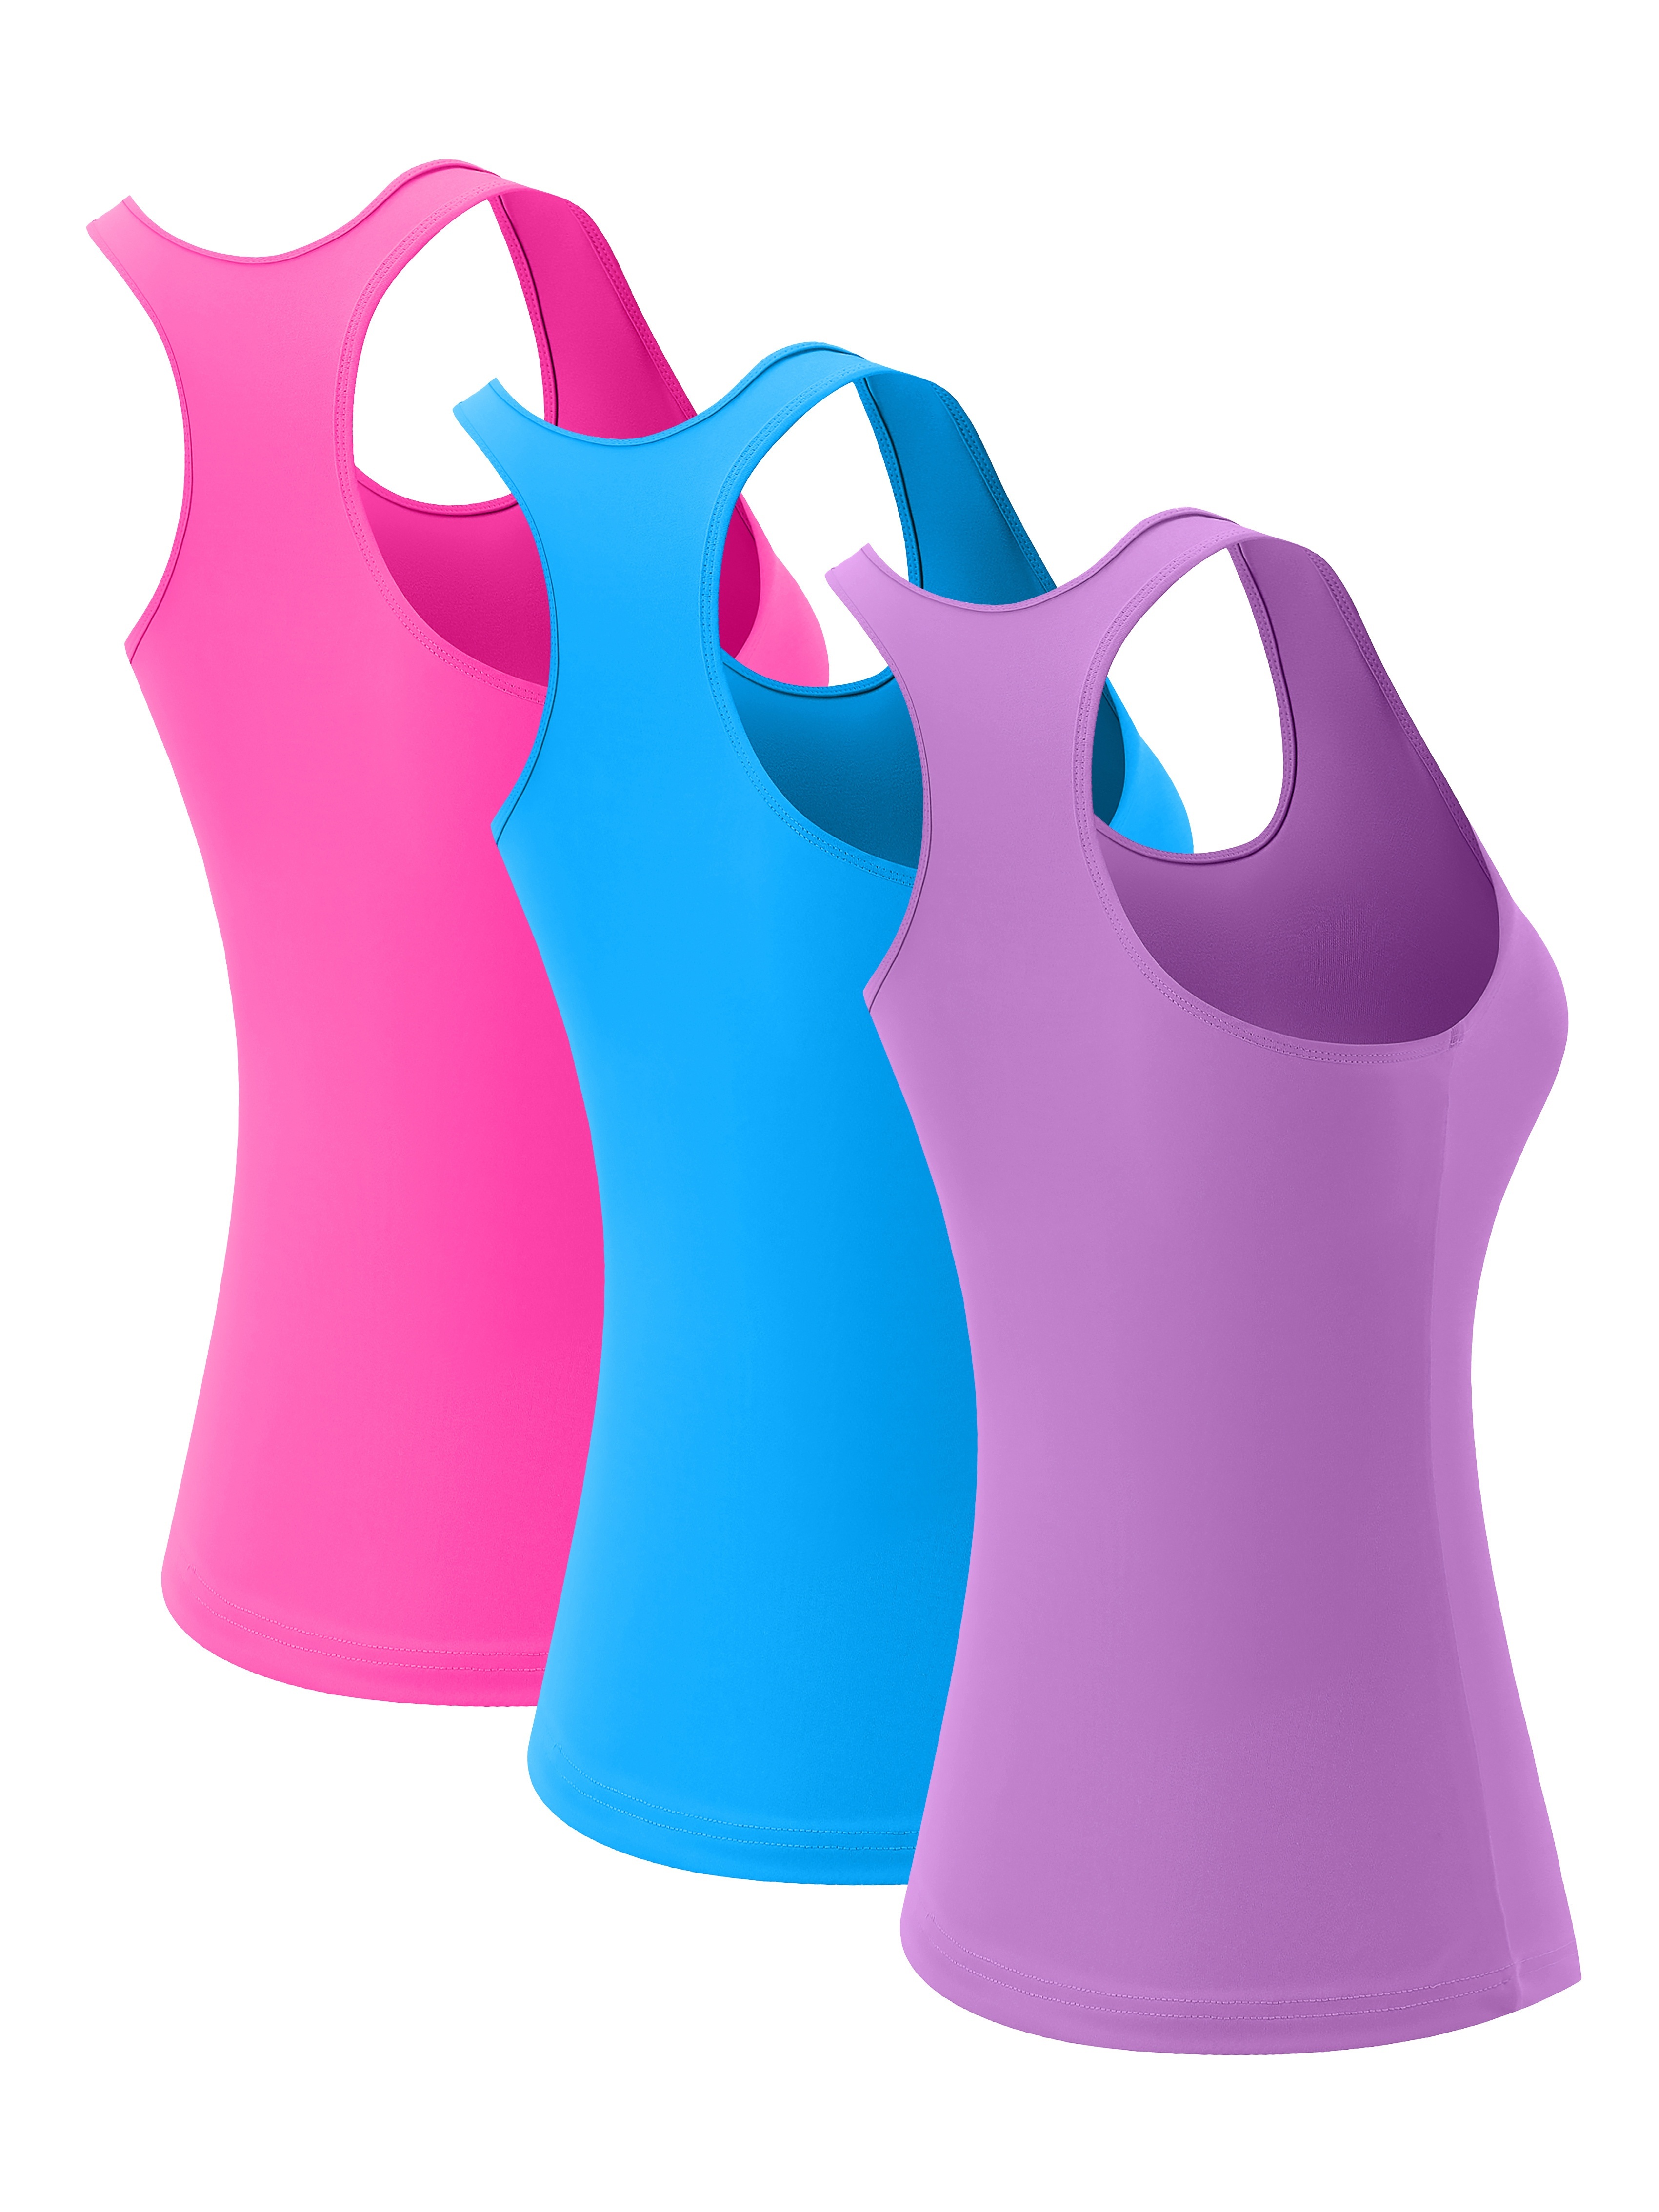 Buy Neleus Women's 3 Pack Compression Running Dry Fit Sleeveless